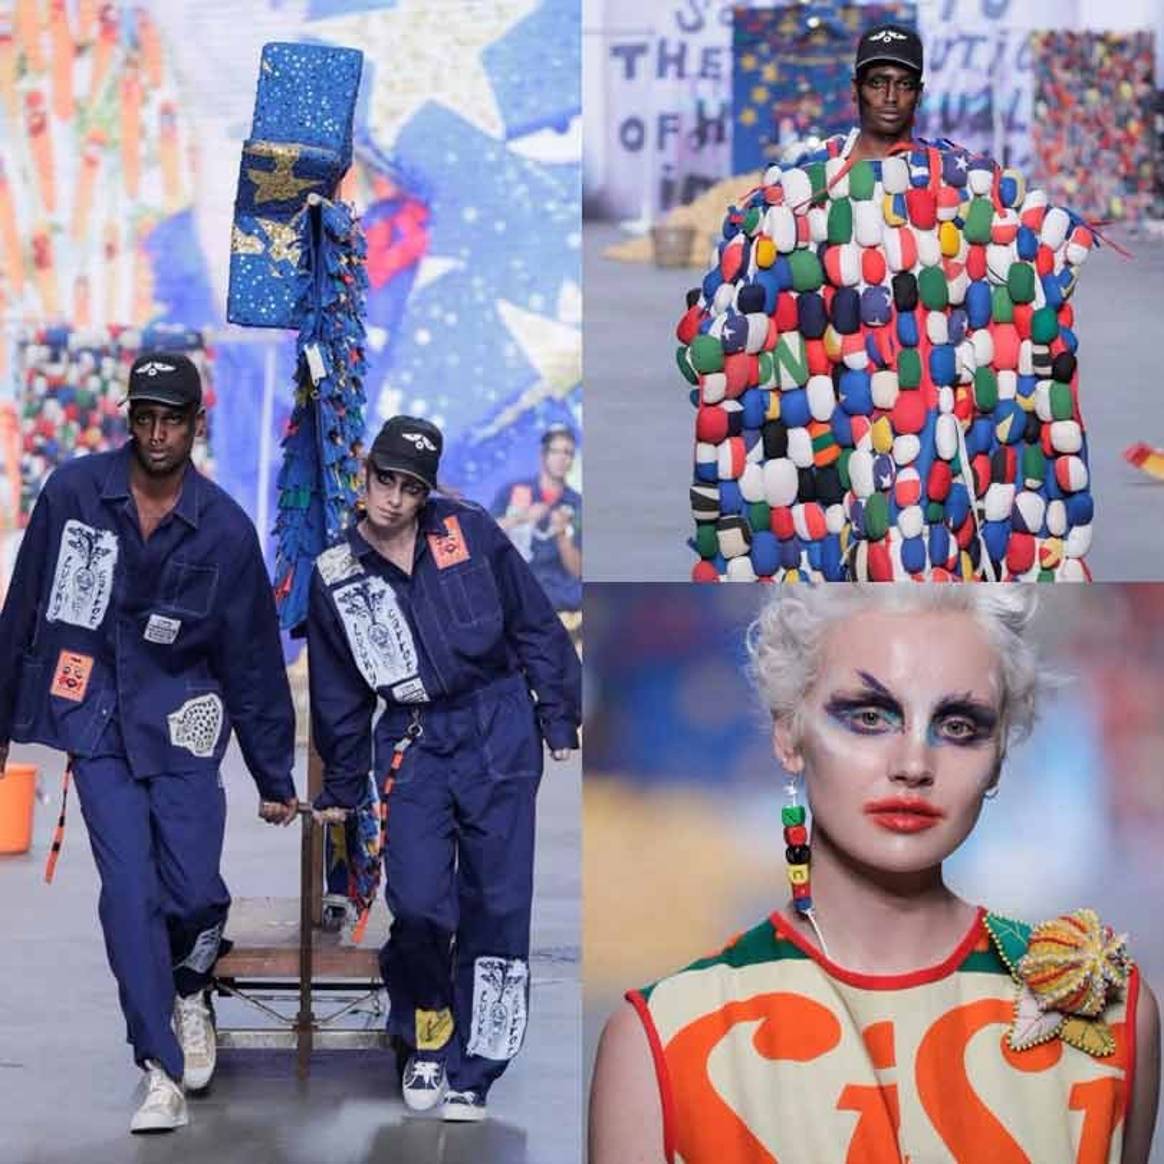 Amsterdam Fashion Week promotes reusing & recycling fashion